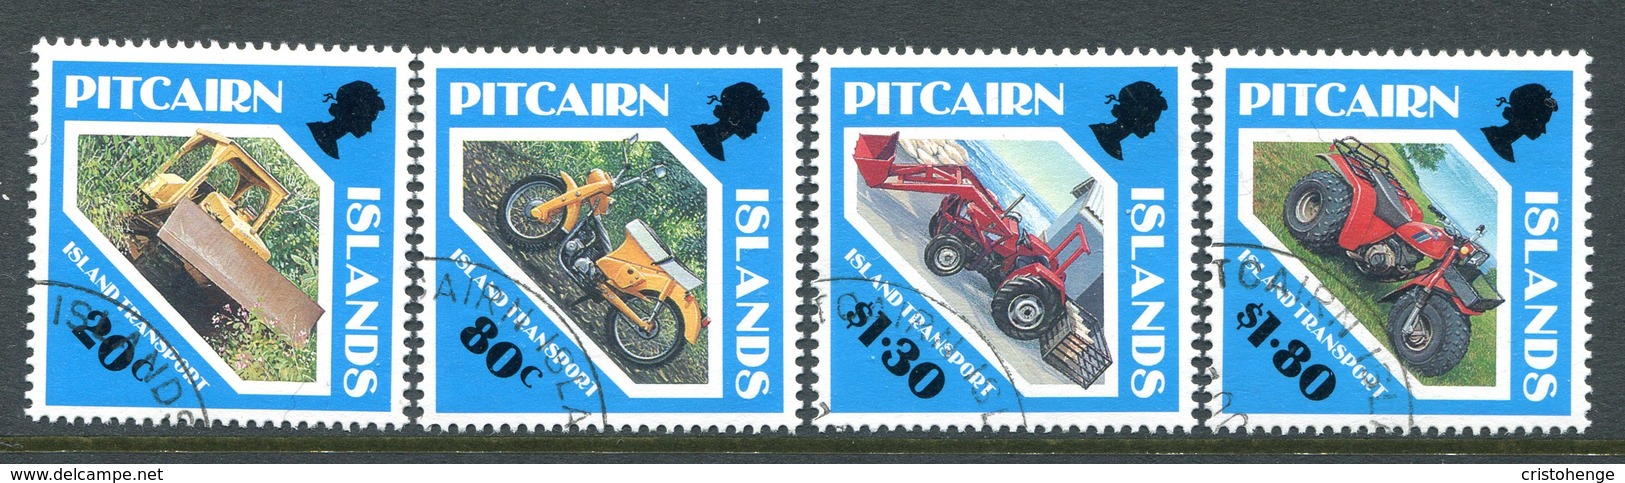 Pitcairn Islands 1991 Island Transport Set Used (SG 401-404) - Pitcairn Islands